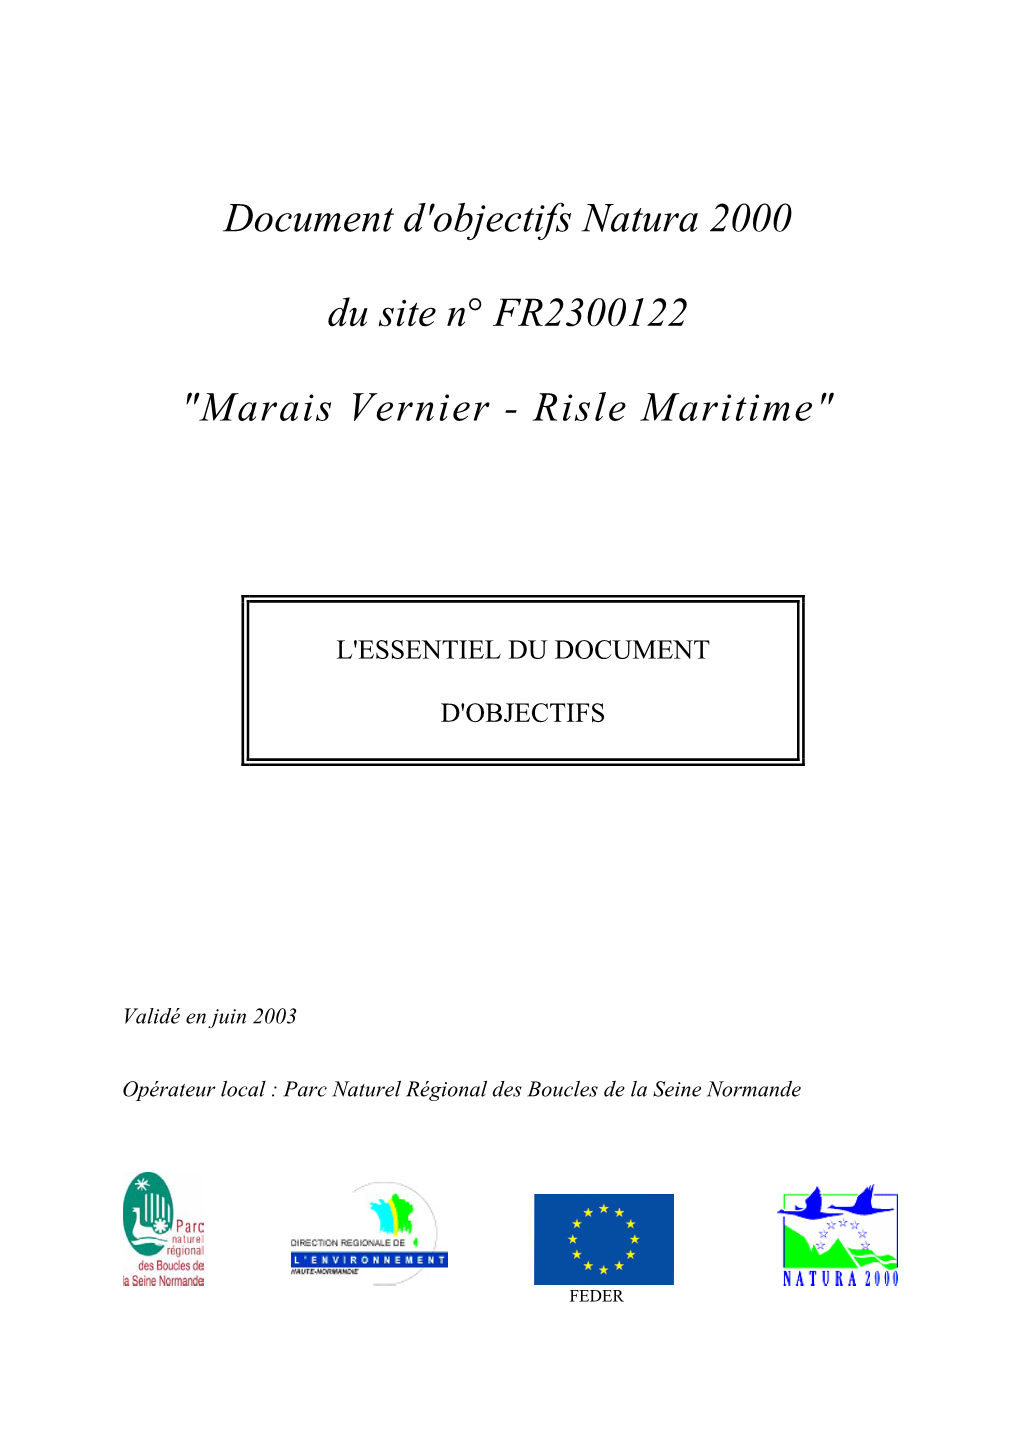 Marais Vernier - Risle Maritime"